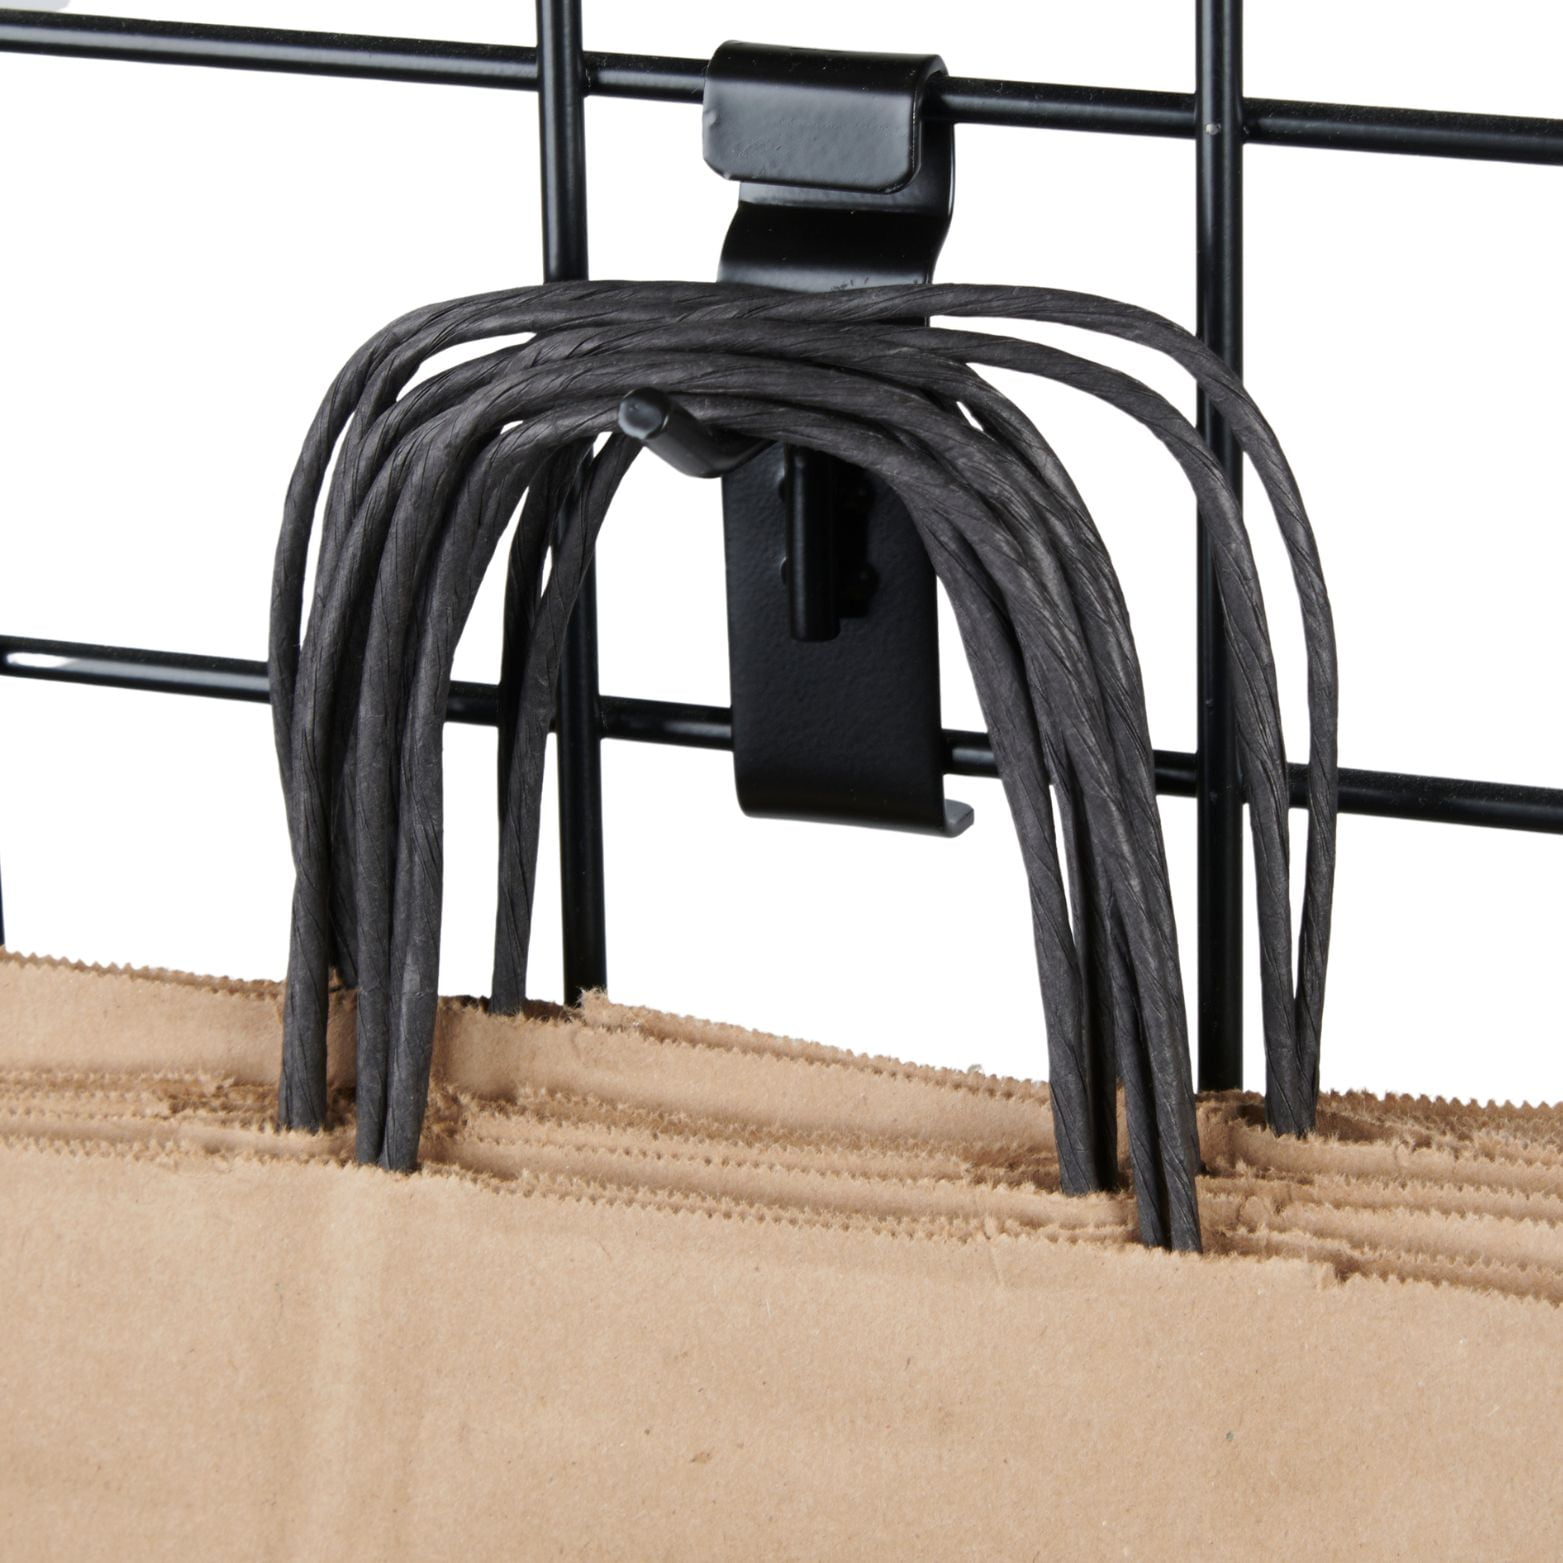  SSWBasics 6 inch Black Peg Hook for Wire Grid - Pack